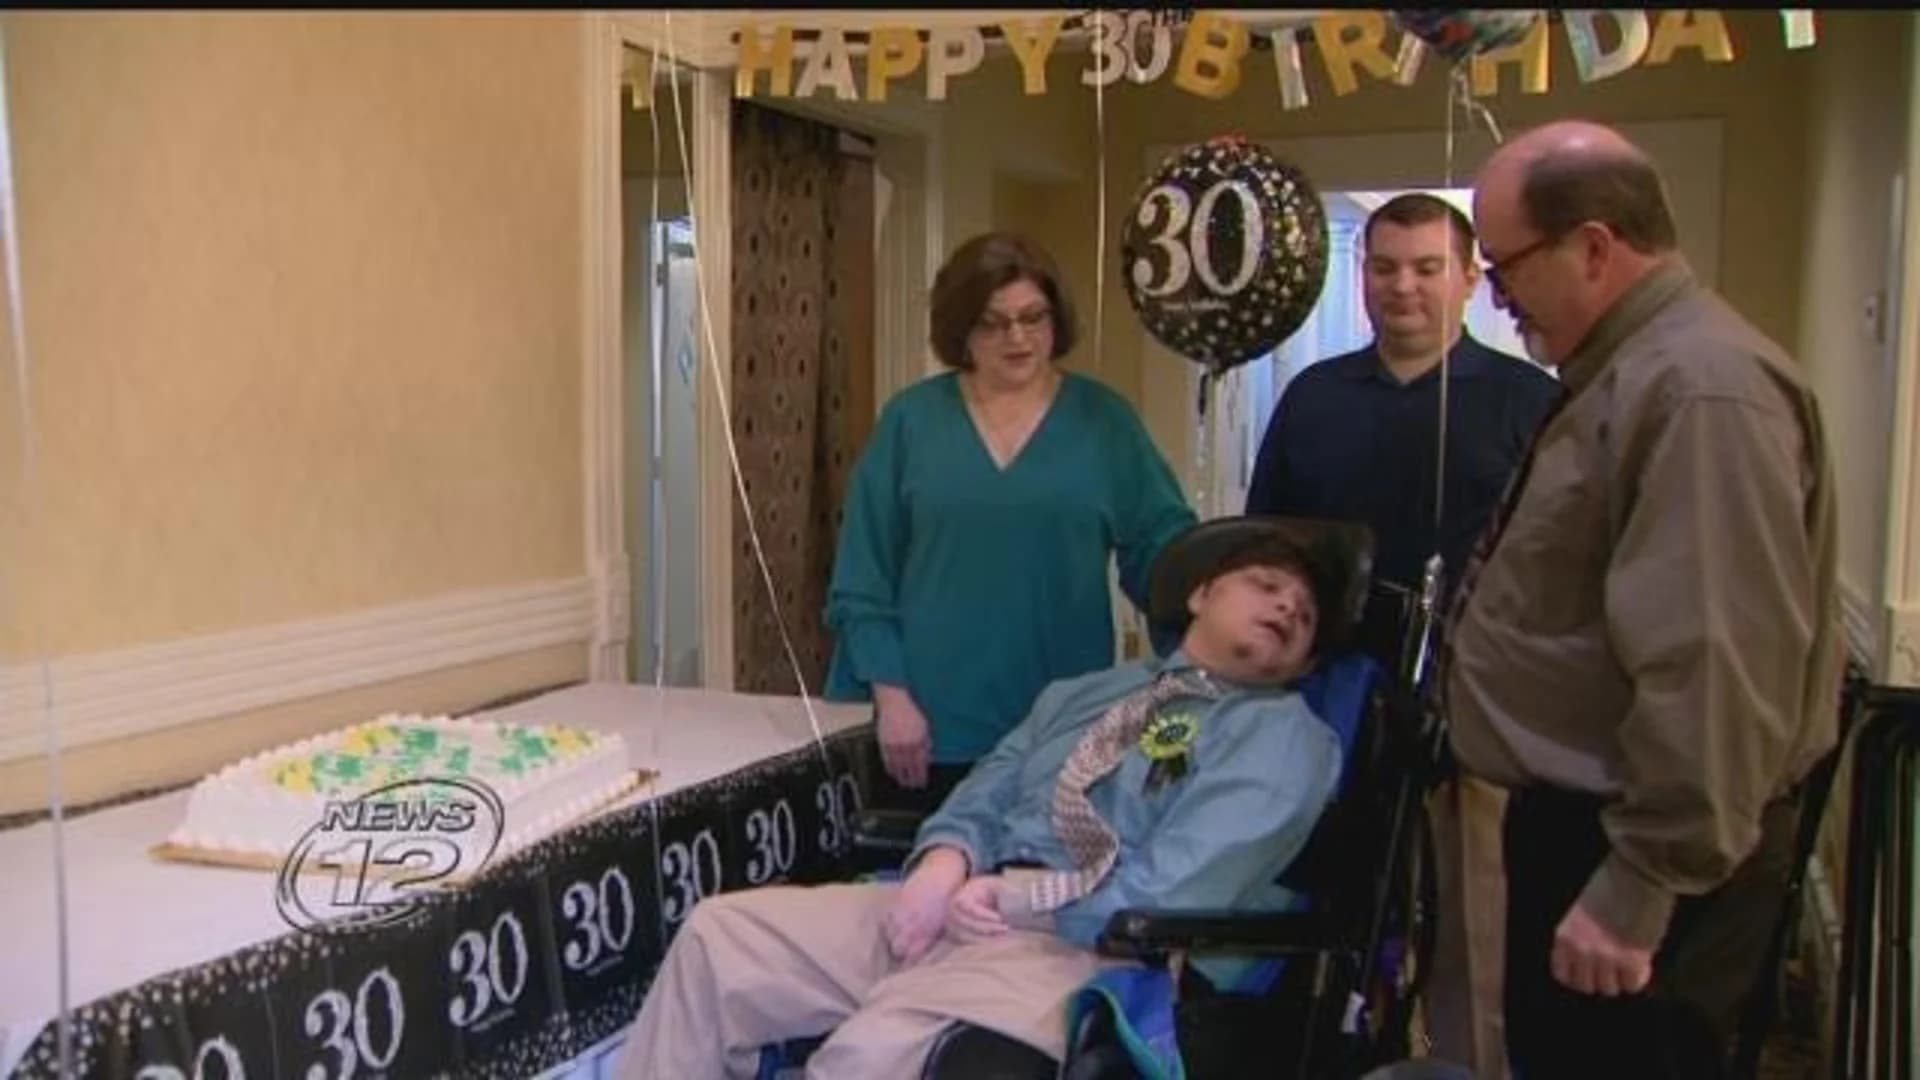 Man with cerebral palsy celebrates milestone birthday with family